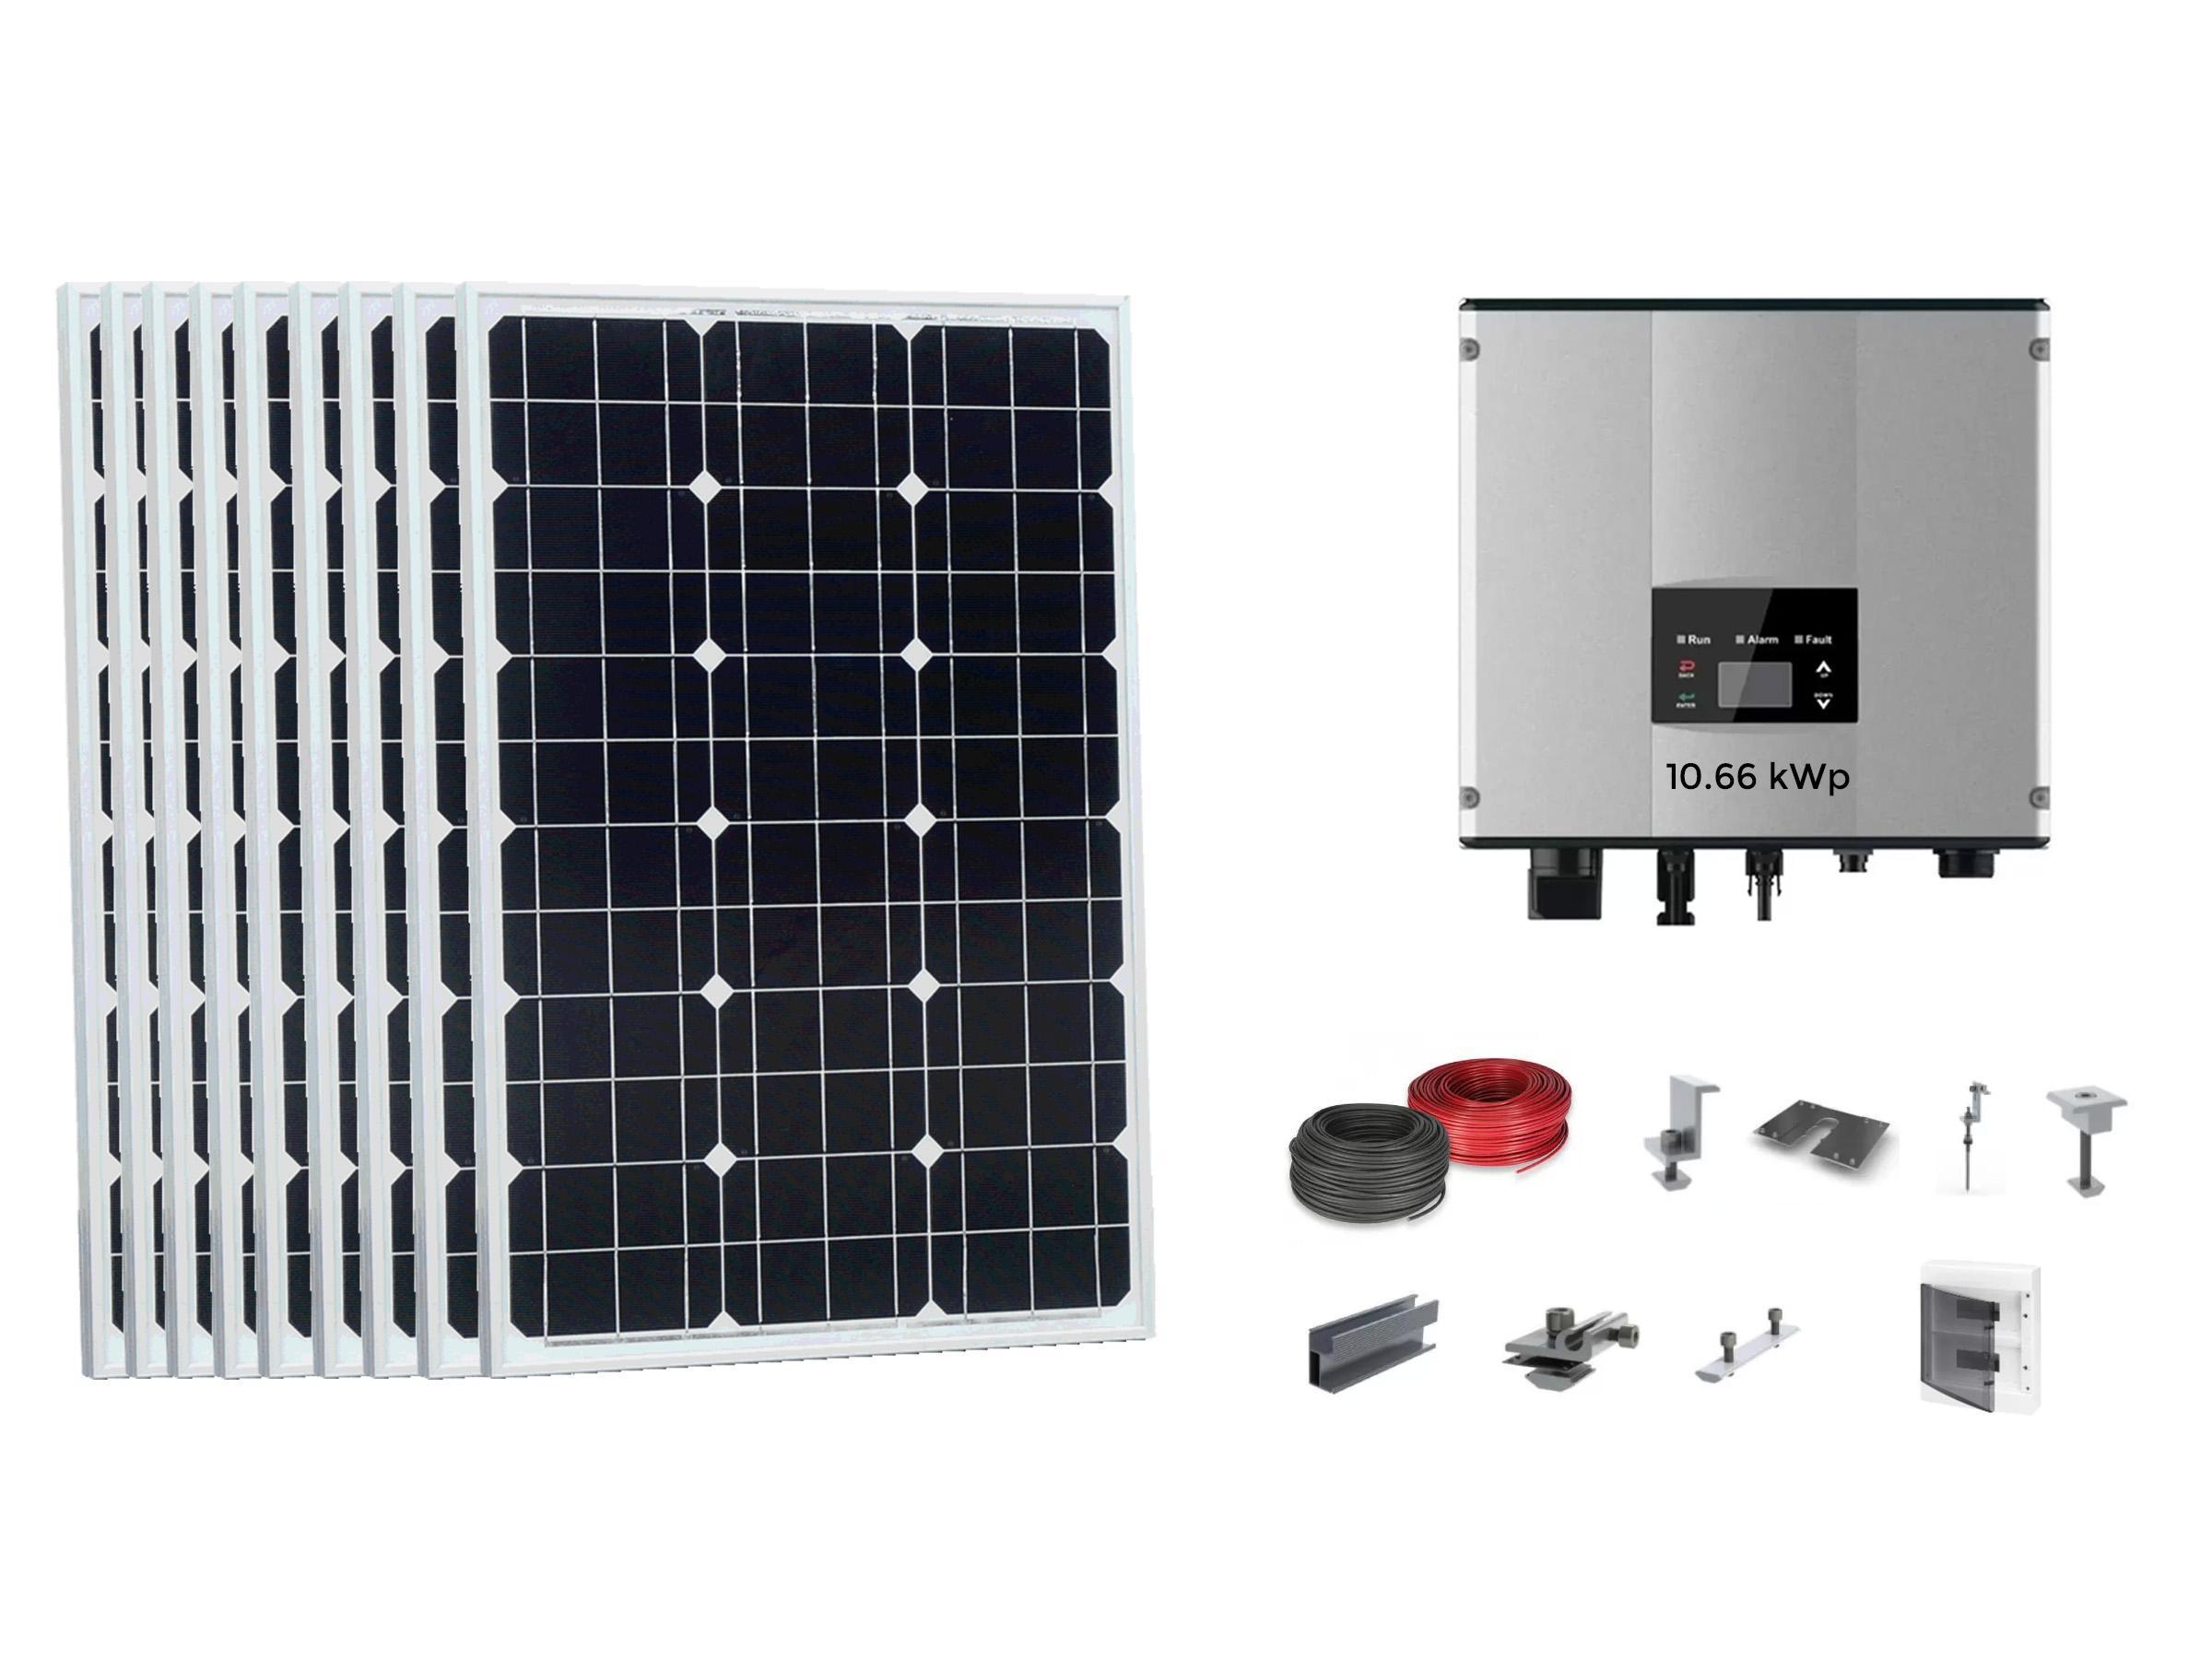 Sistem fotovoltaic on grid 10.66 kwp complet cu invertor imars